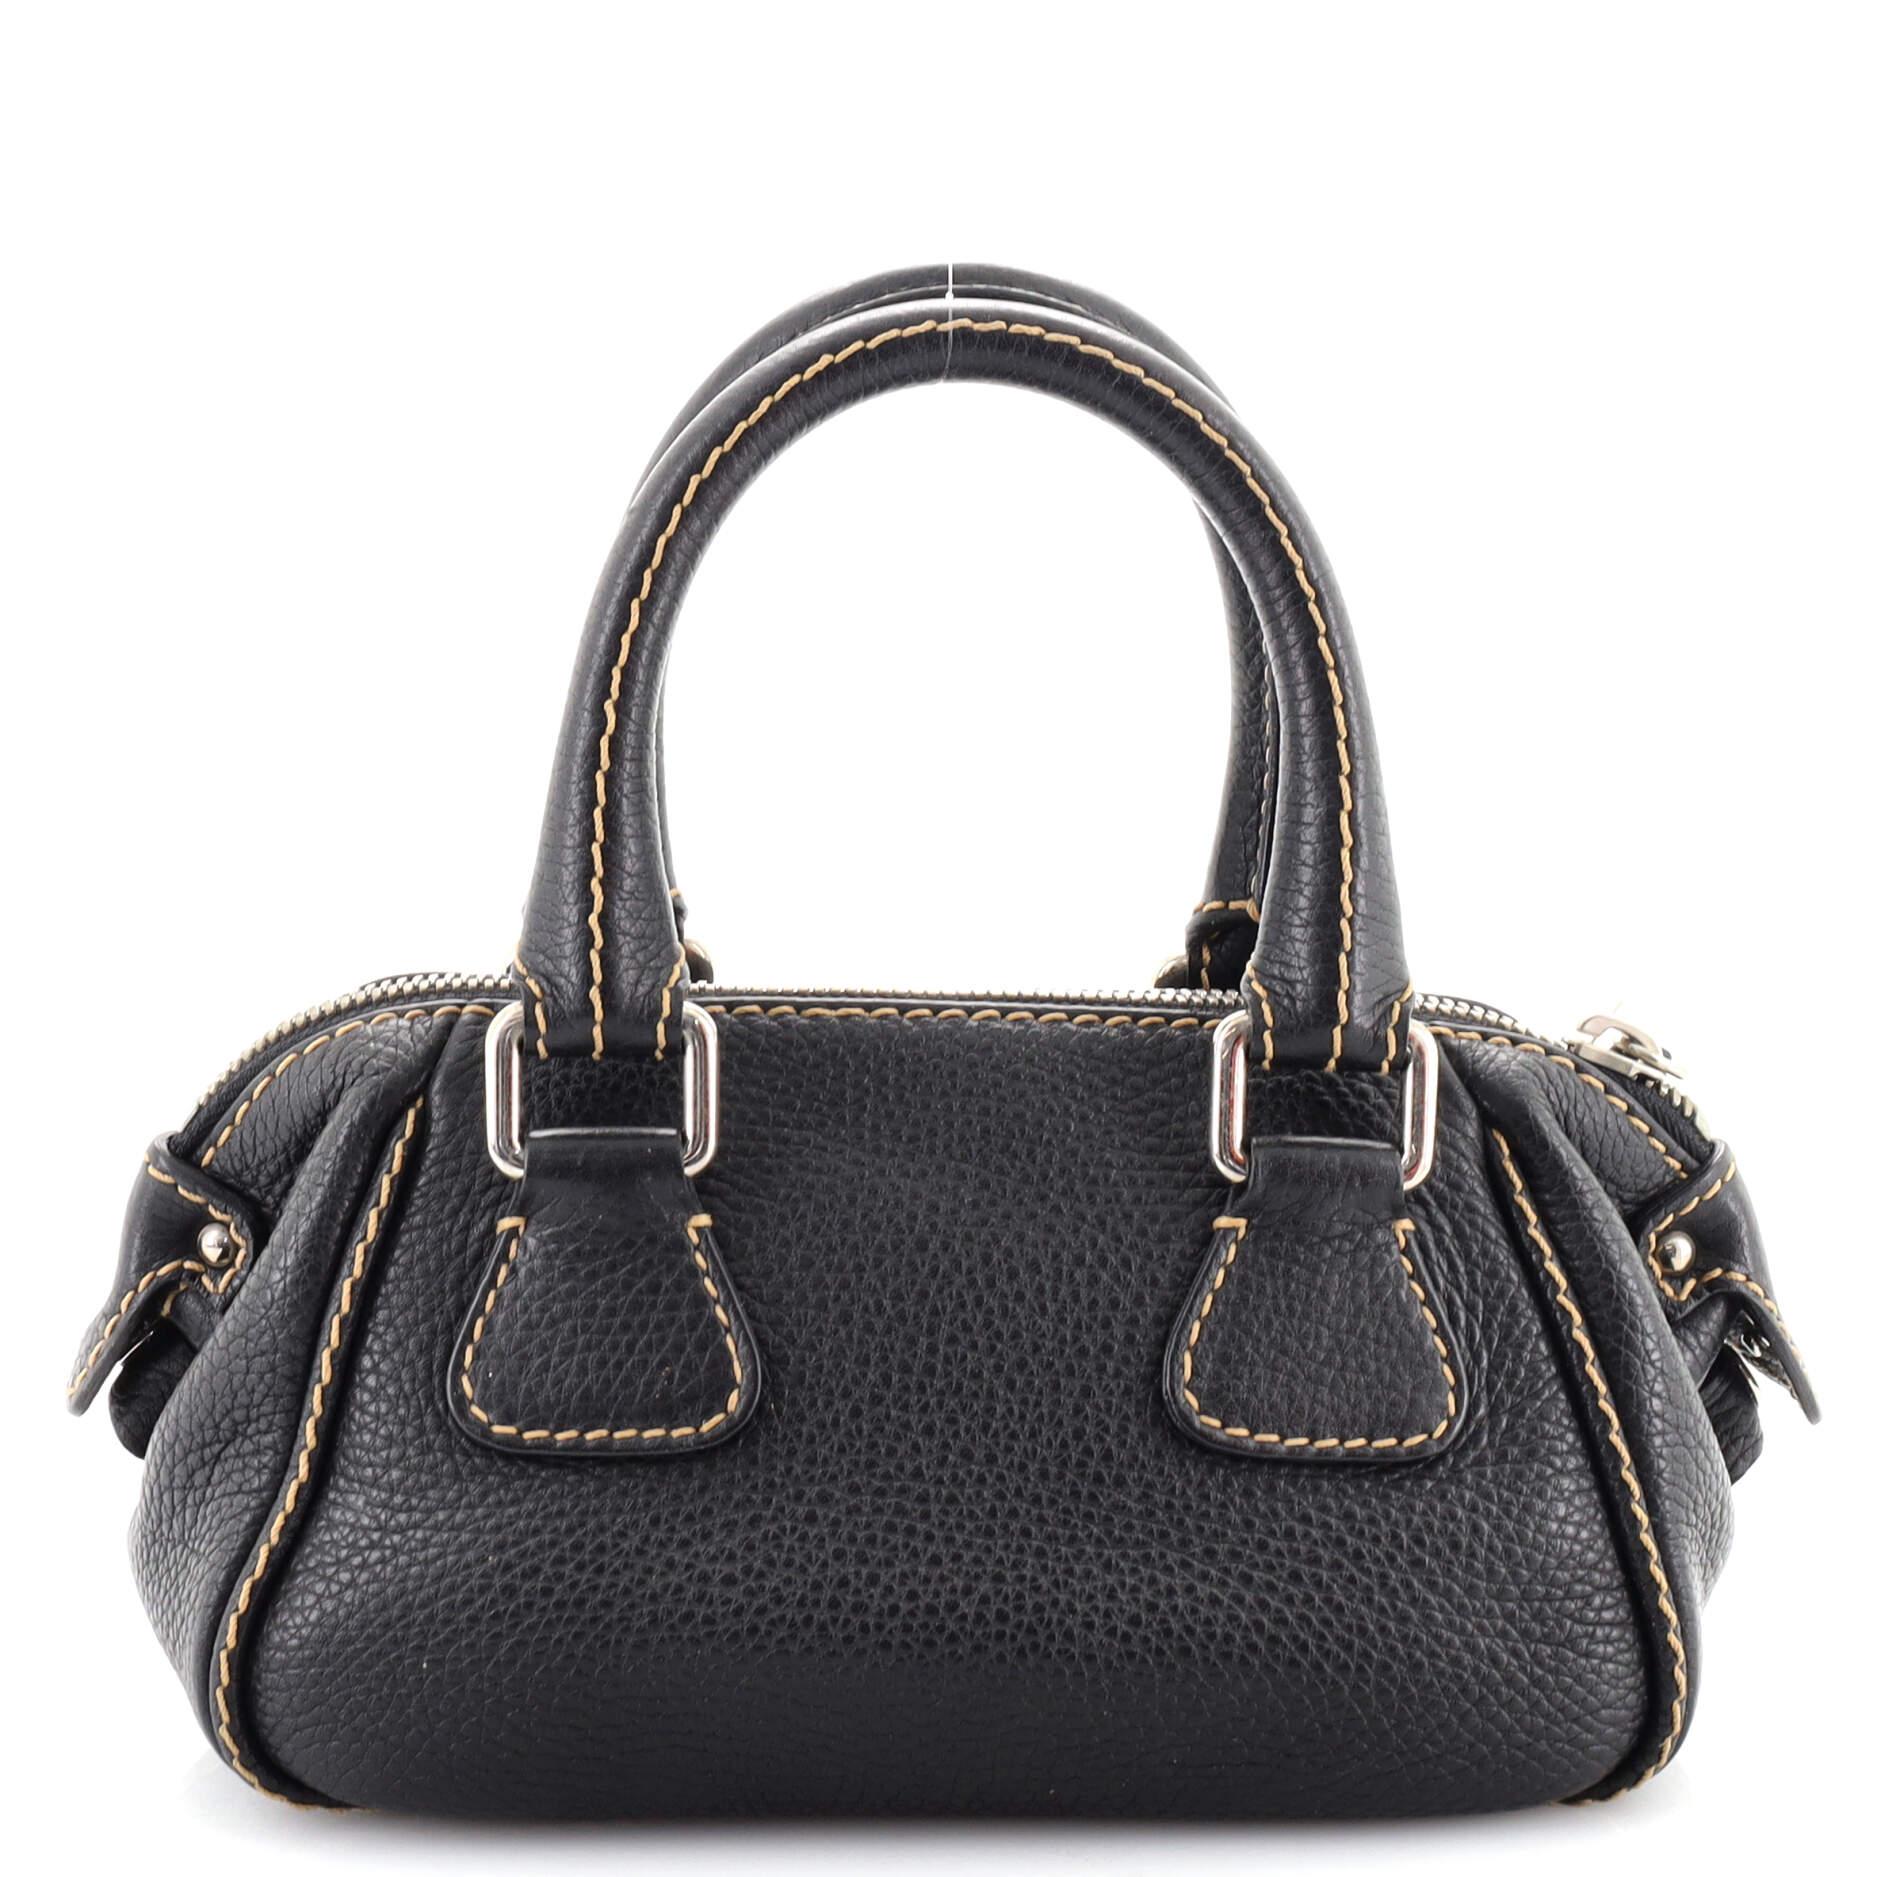 Black Chanel Lax Tassel Bag Pebbled Leather Small